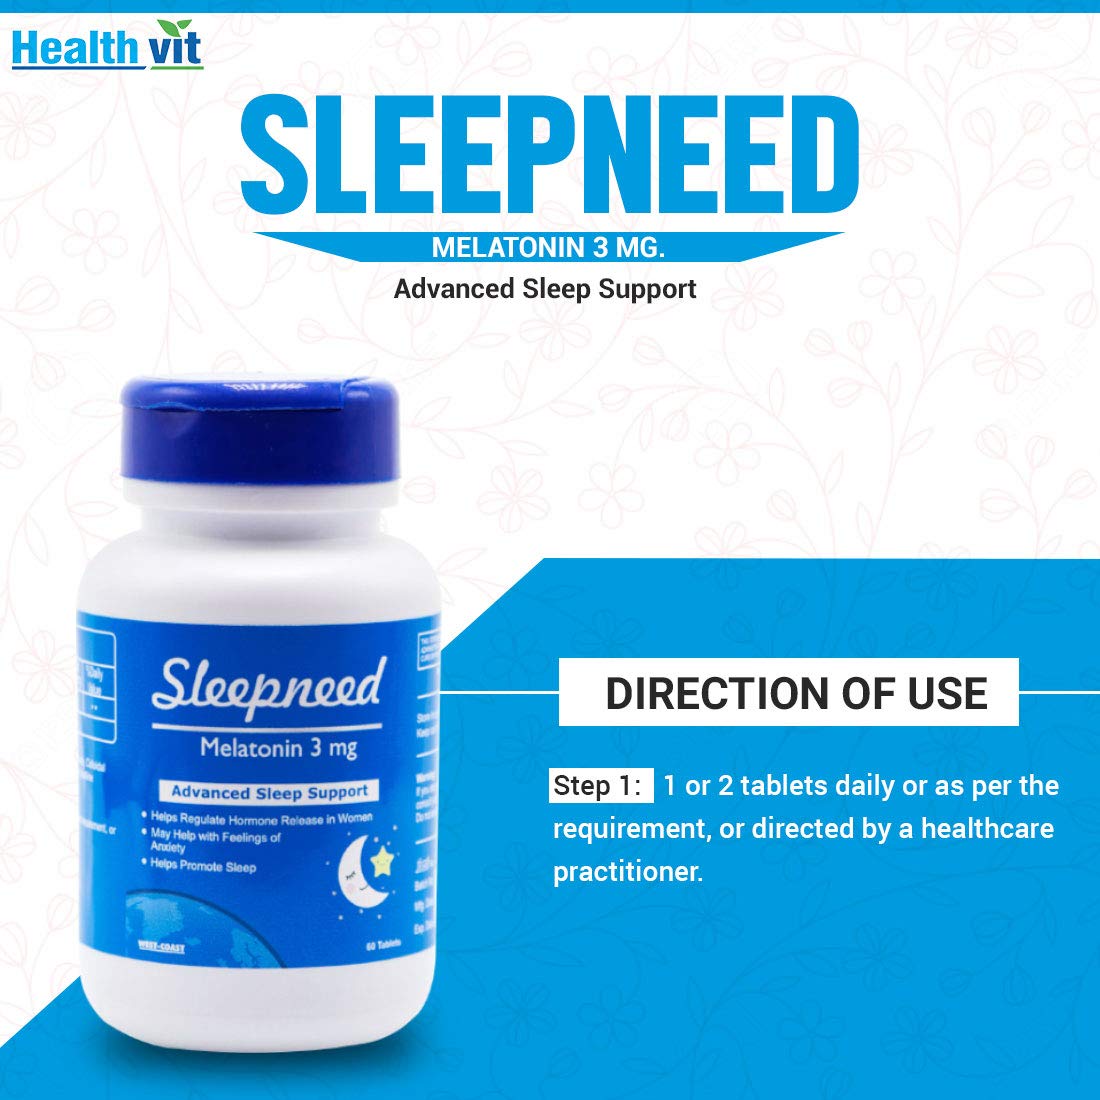 Healthvit Sleepneed Melatonin 3mg | Formulated to Promote Peaceful Sleep | Advanced Sleep Support | Stay Asleep Longer, Easy to Take, Faster Absorption - 60 Tablets